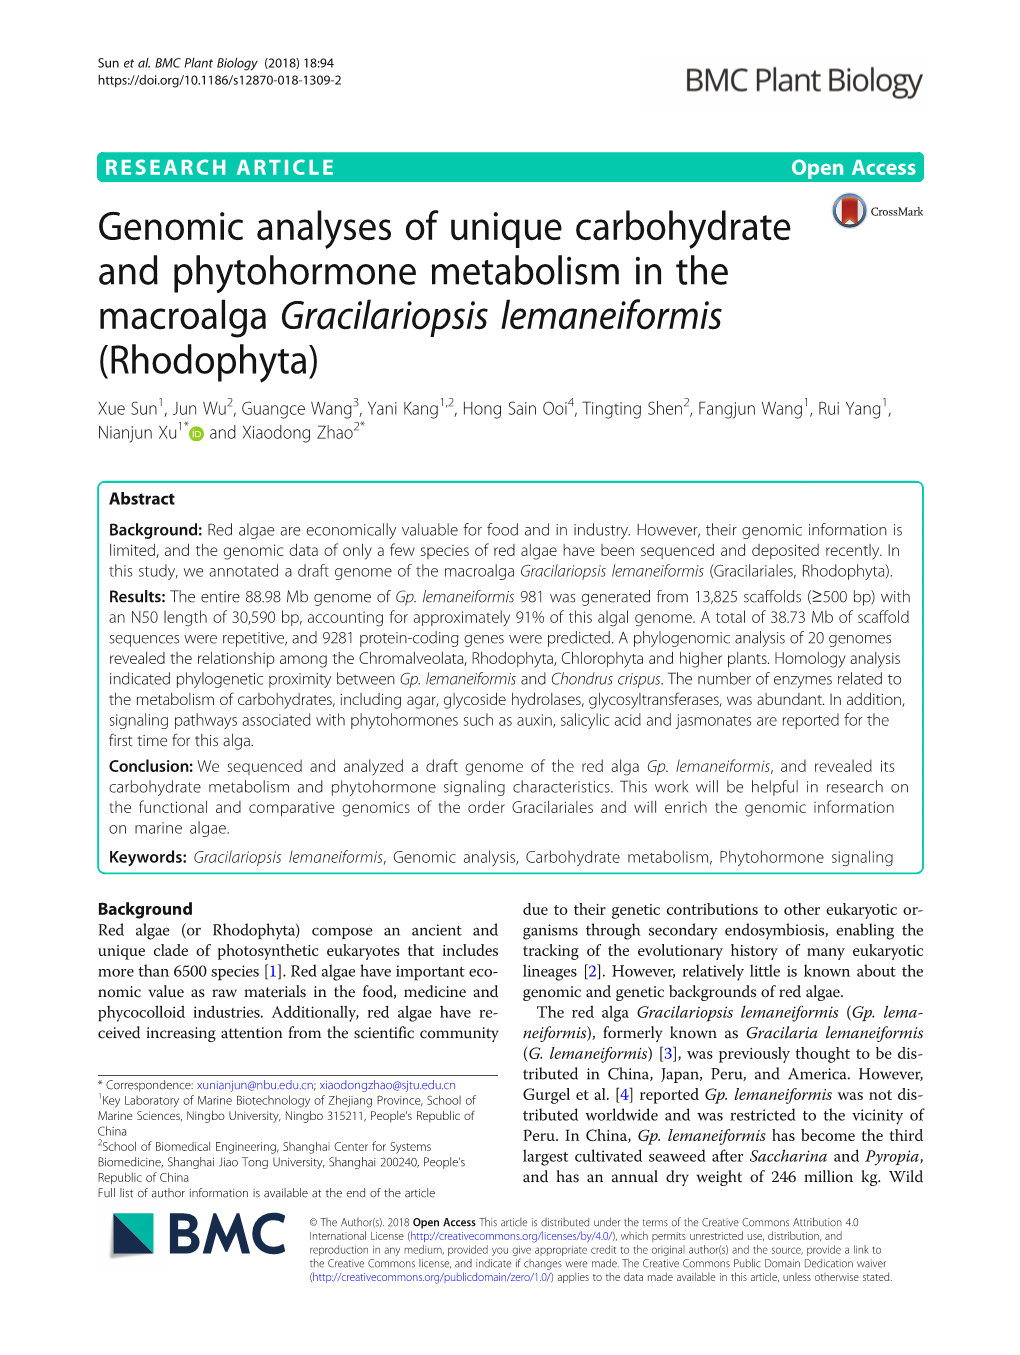 Genomic Analyses of Unique Carbohydrate and Phytohormone Metabolism in the Macroalga Gracilariopsis Lemaneiformis (Rhodophyta)